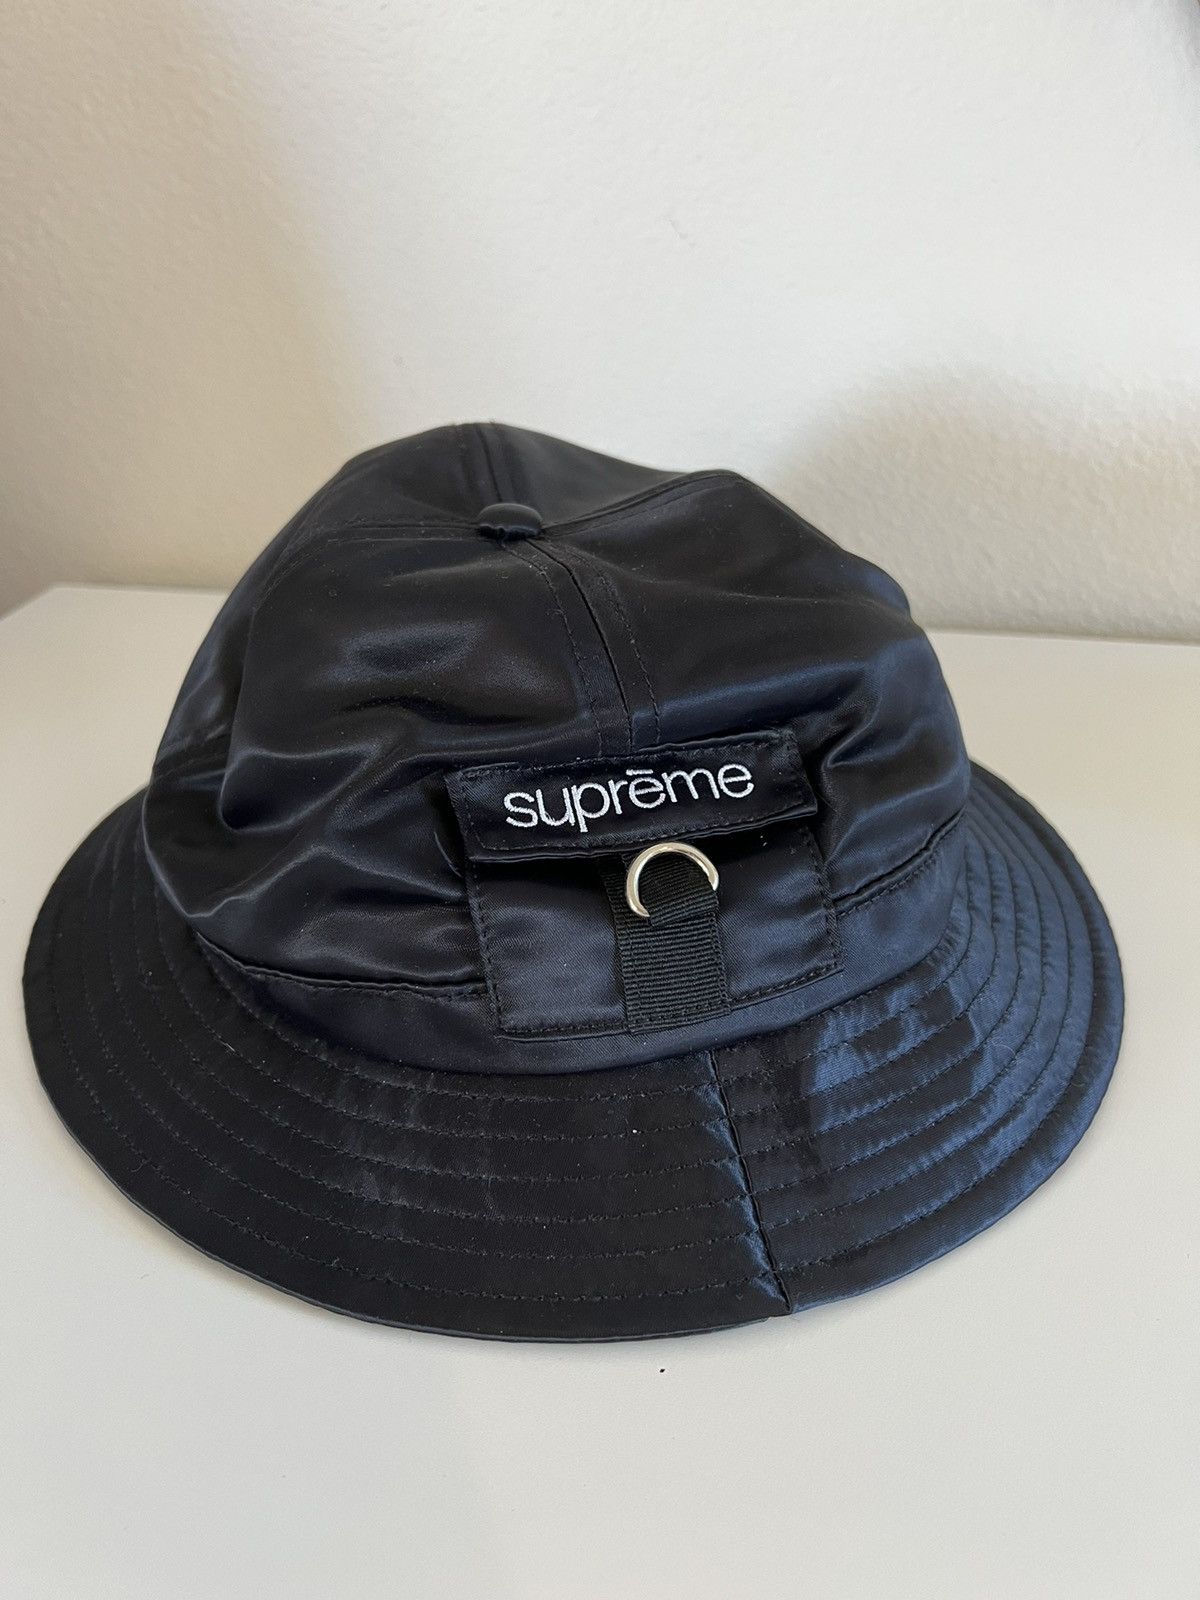 Supreme Supreme Cordura Pocket Bell Bucket Hat | Grailed